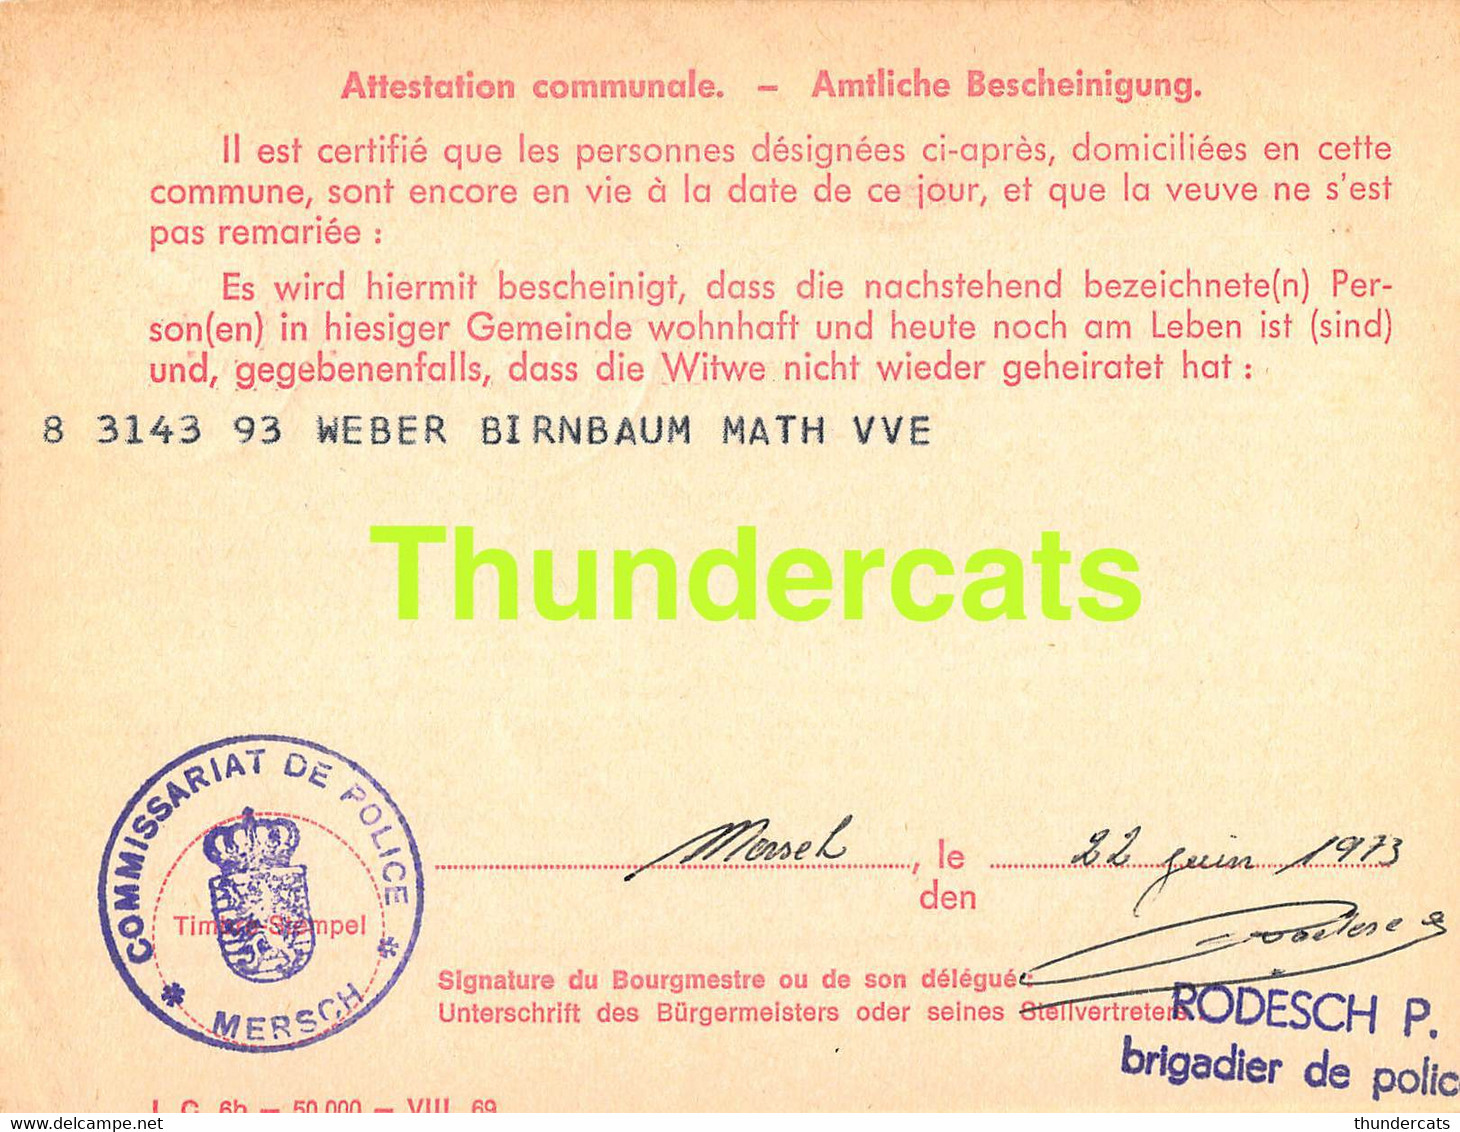 ASSURANCE VIEILLESSE INVALIDITE LUXEMBOURG 1973 MERSCH WEBER BIRNBAUM - Cartas & Documentos